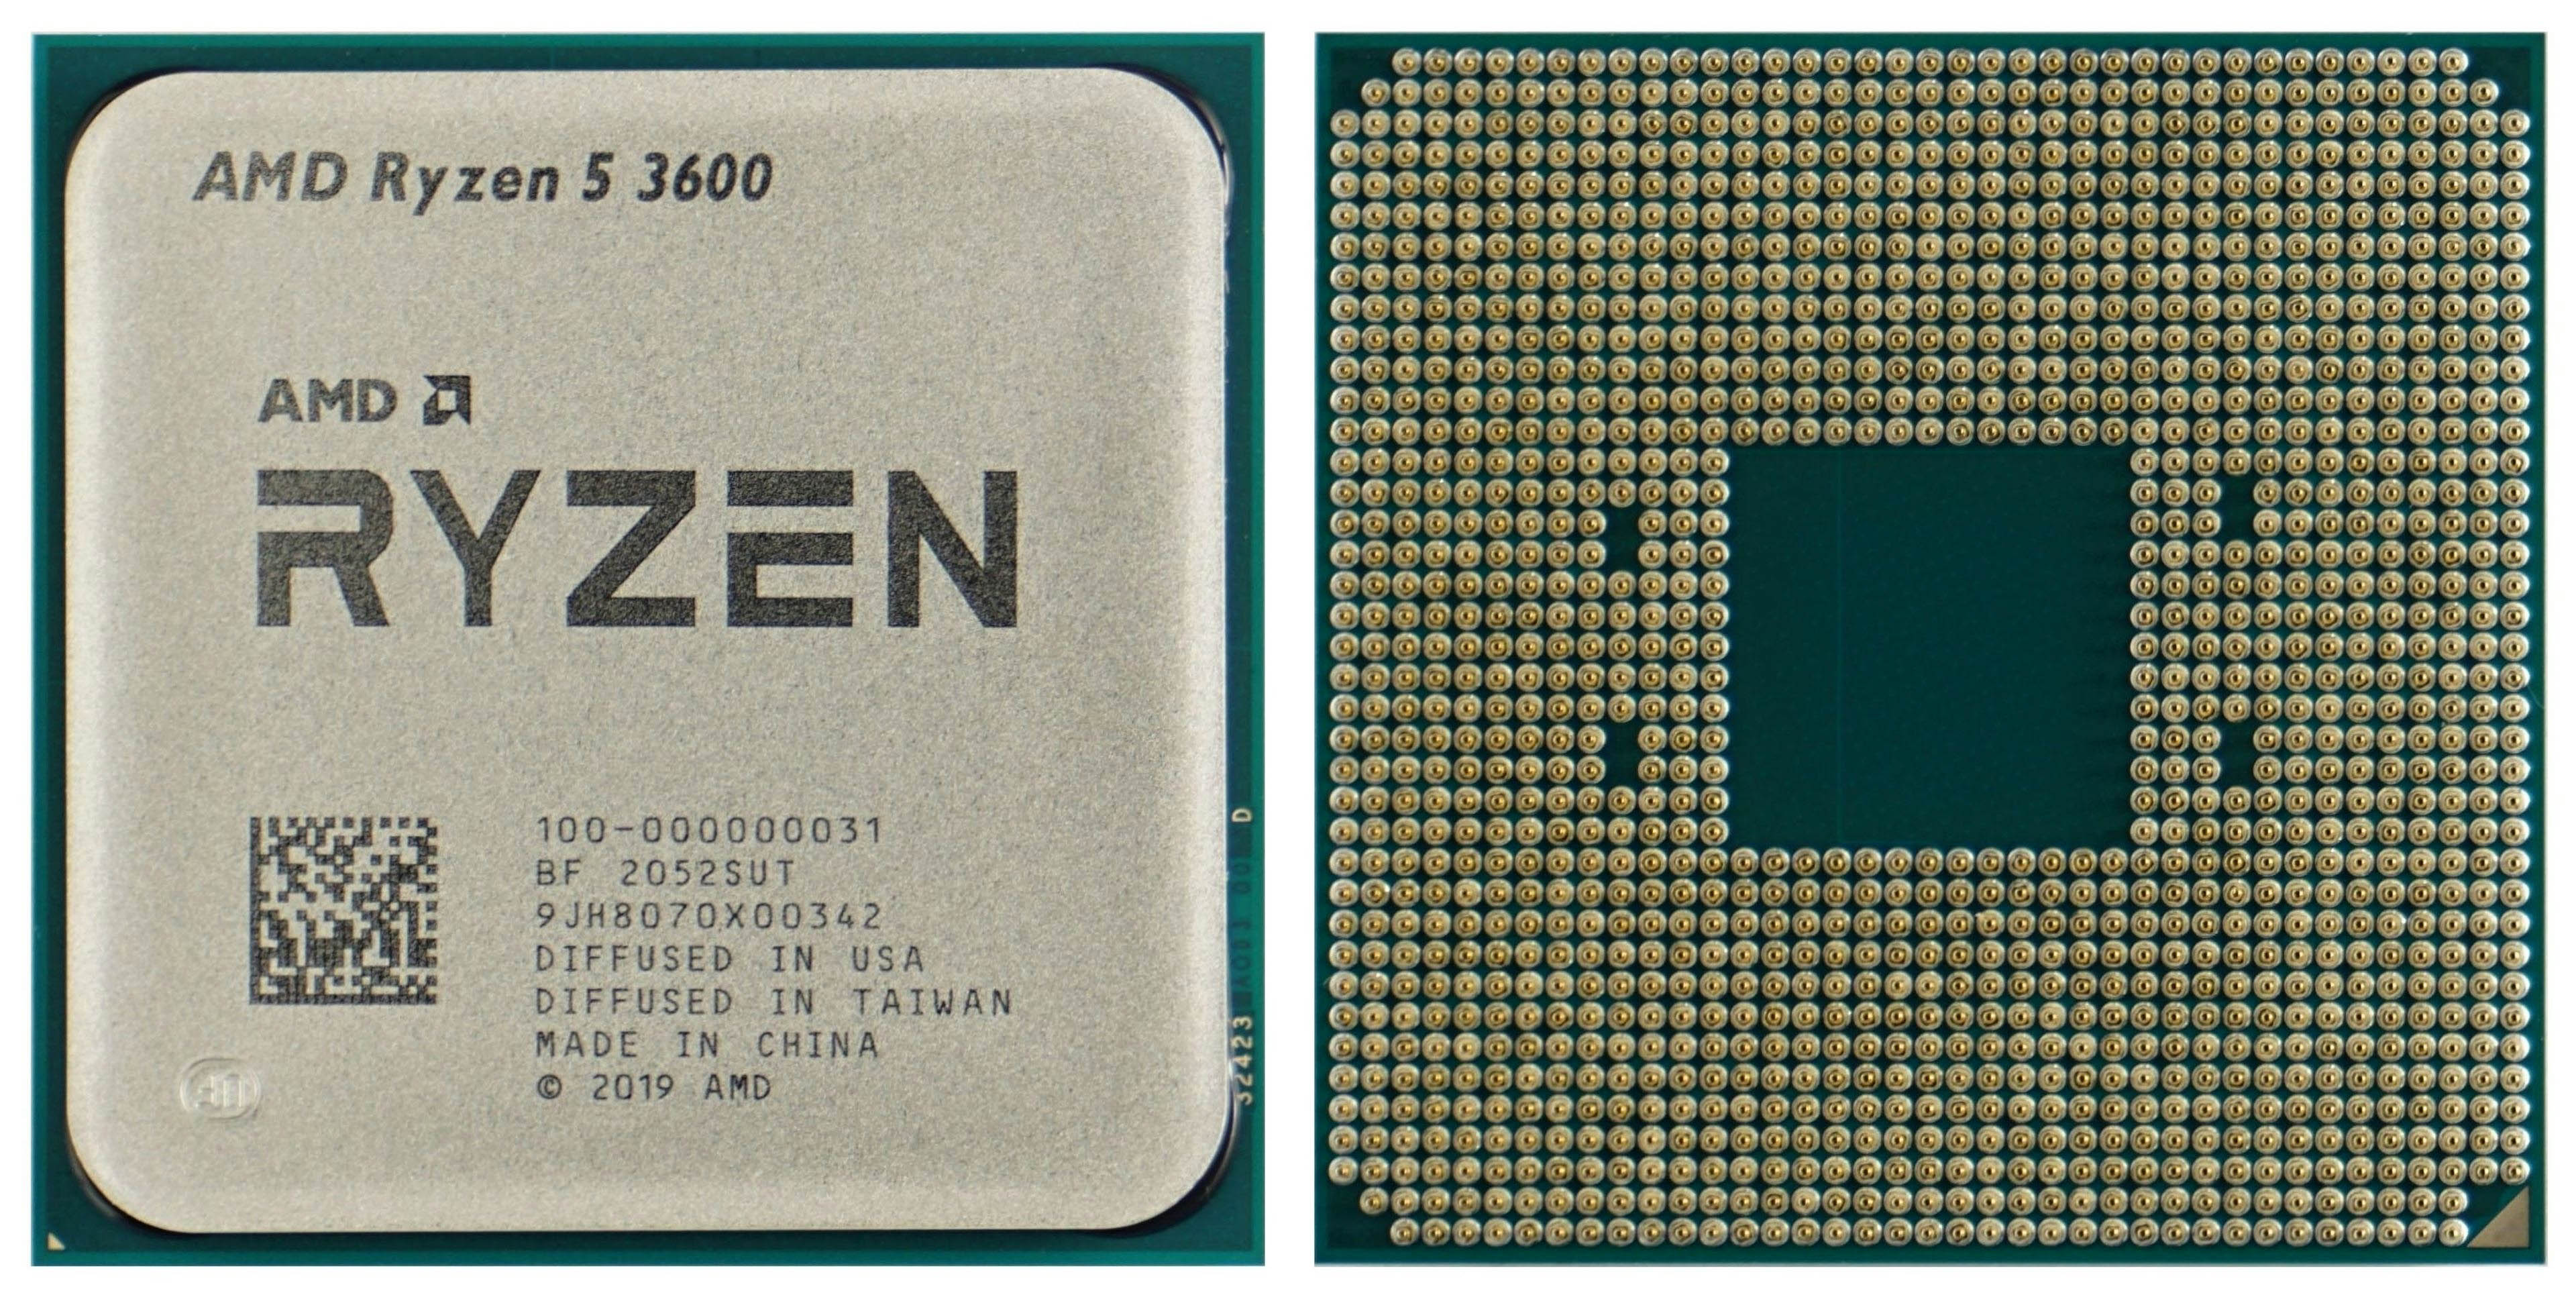 AMD Ryzen 5 3600 Older bestseller headtohead with new CPUs